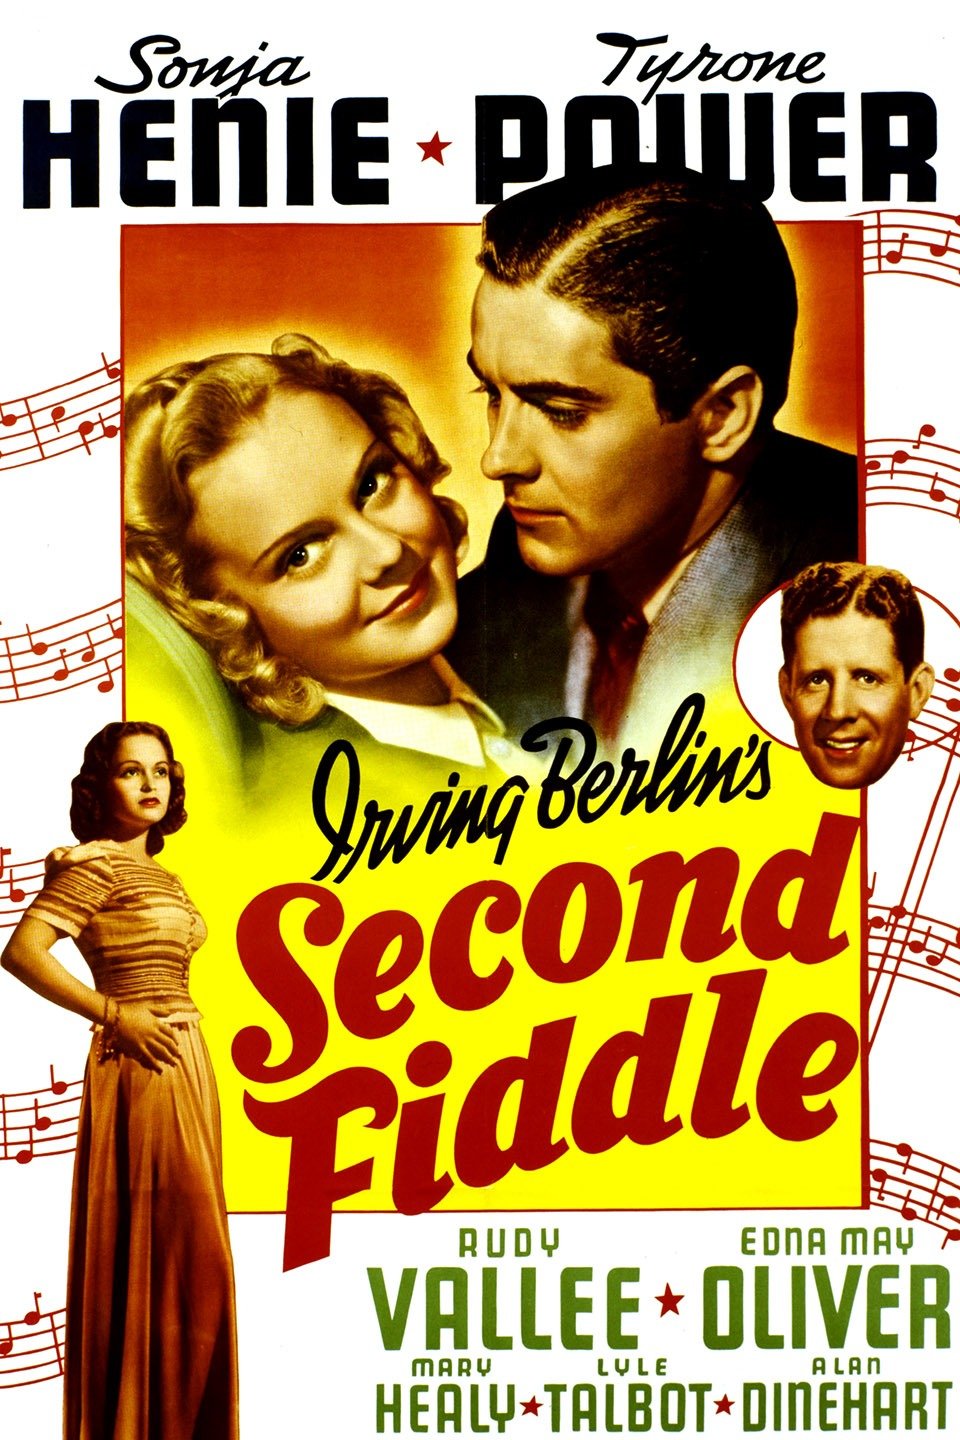 Sonja Henie در صحنه فیلم سینمایی Second Fiddle به همراه Rudy Vallee، Mary Healy و Tyrone Power